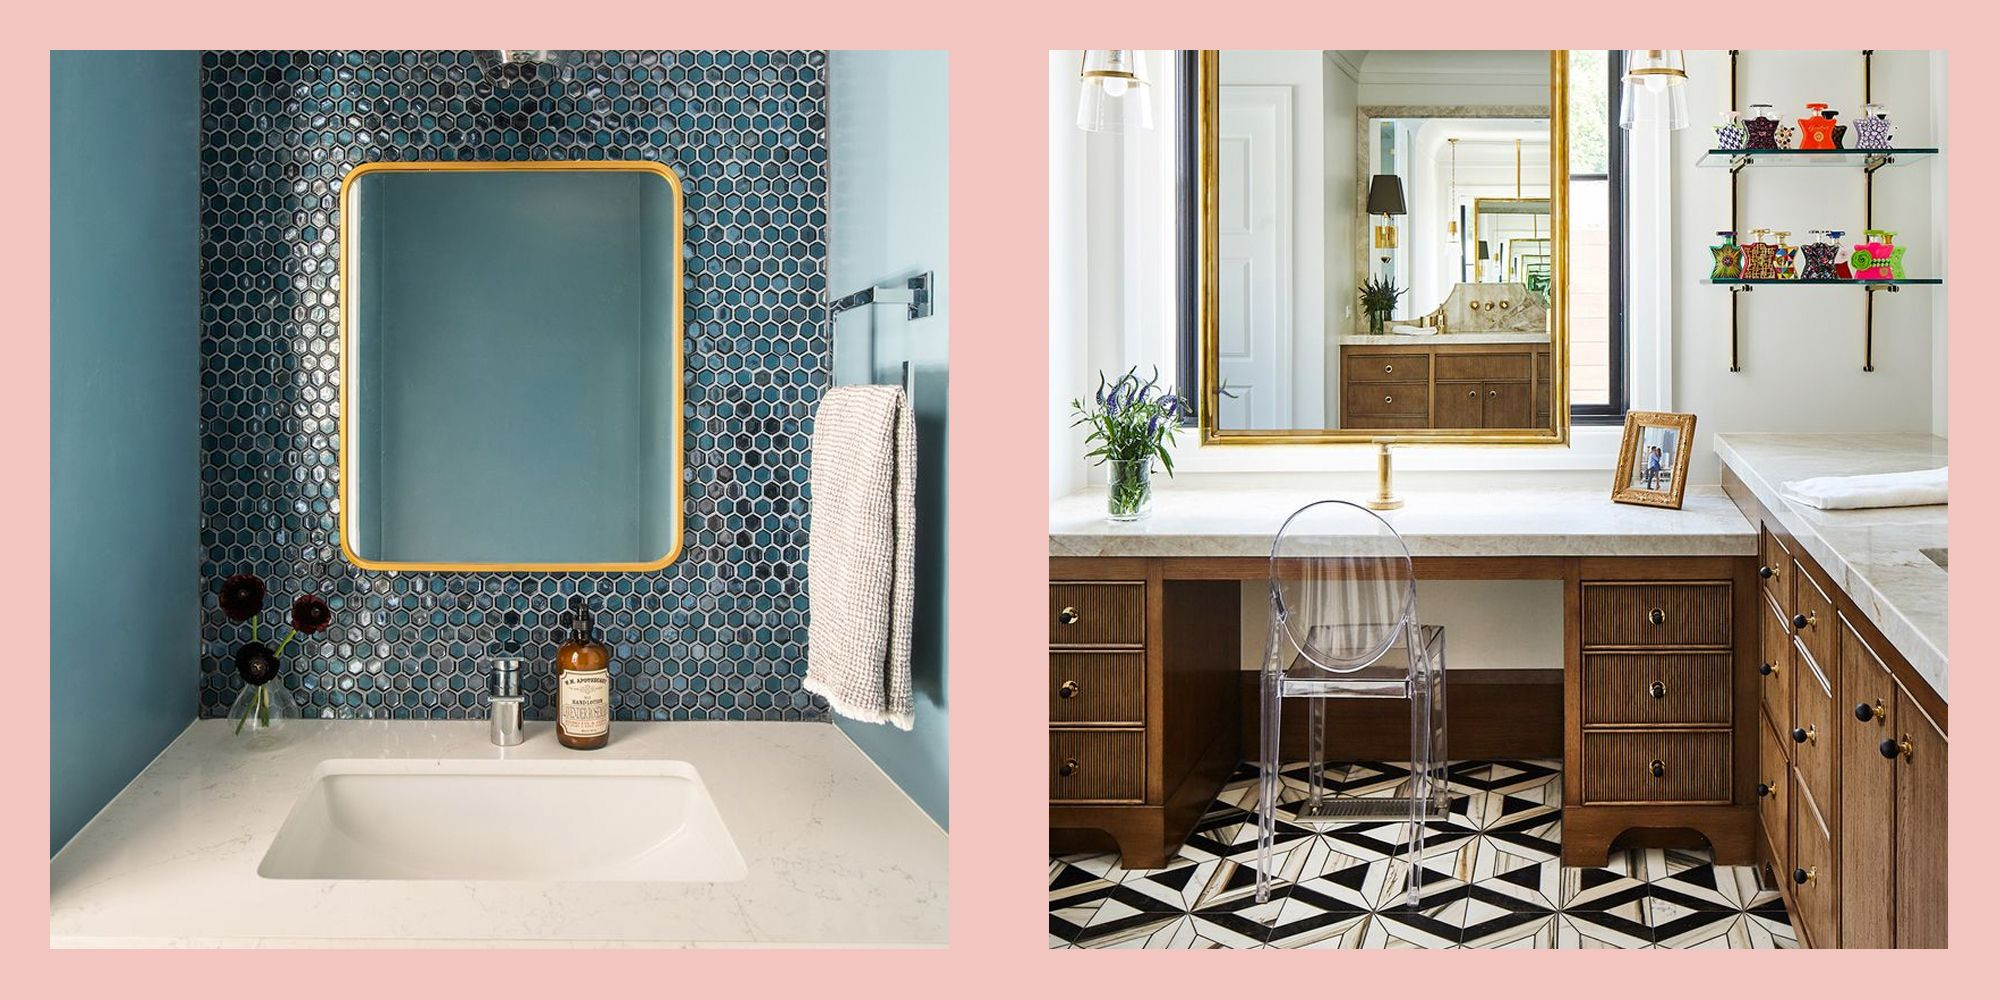 Bathroom Decor Ideas 2020
 Interior Design News Articles Stories & Trends for Today